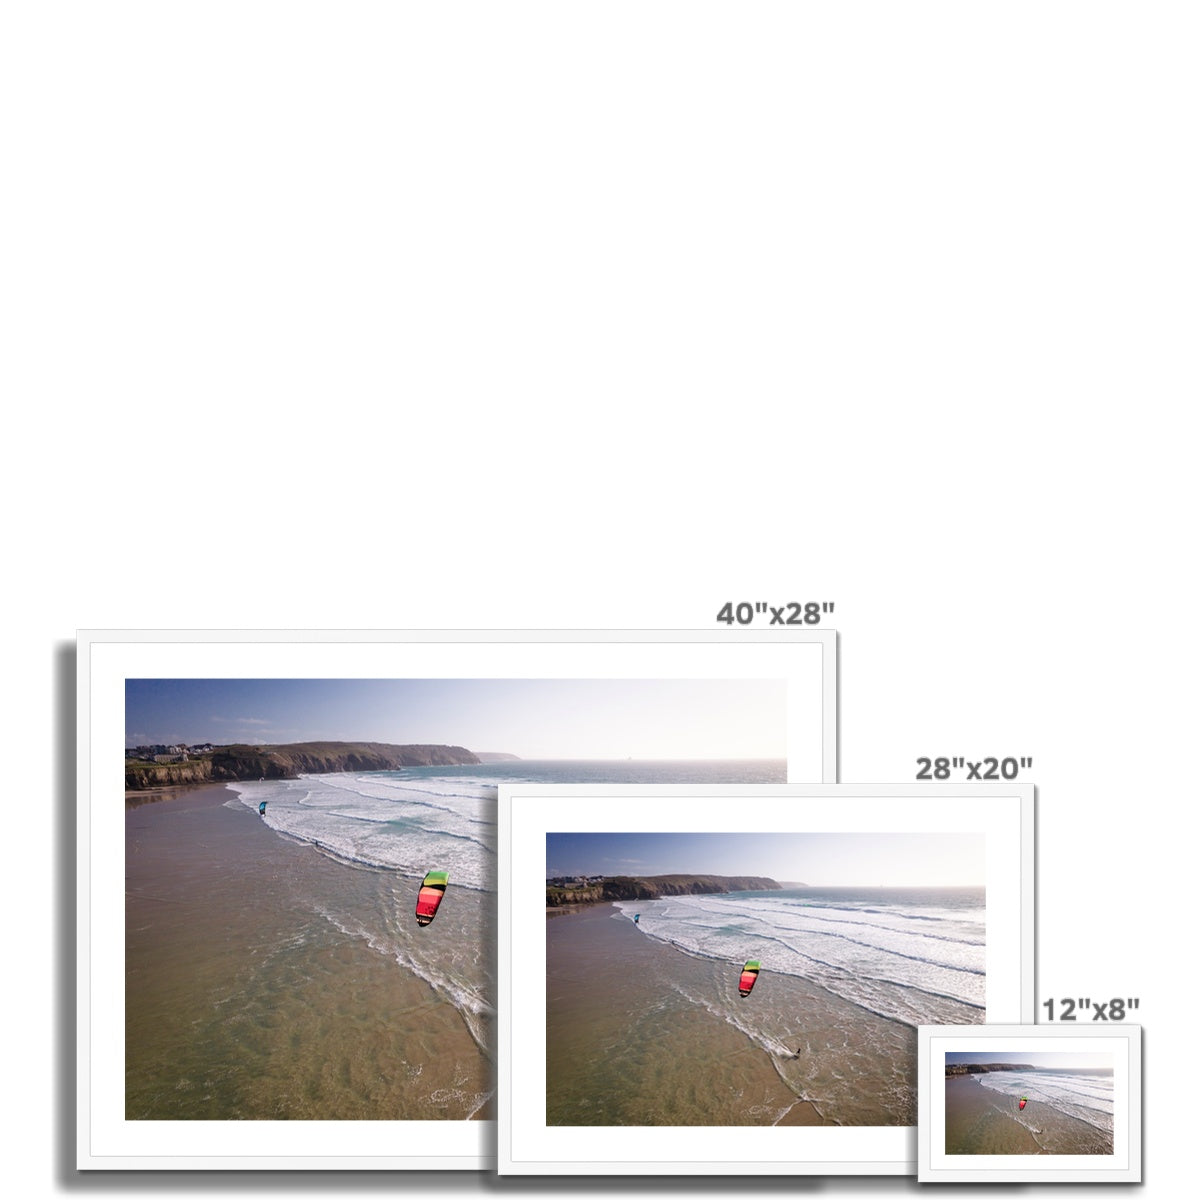 Rainbow Kitesurfer, Perranporth ~ Framed & Mounted Print